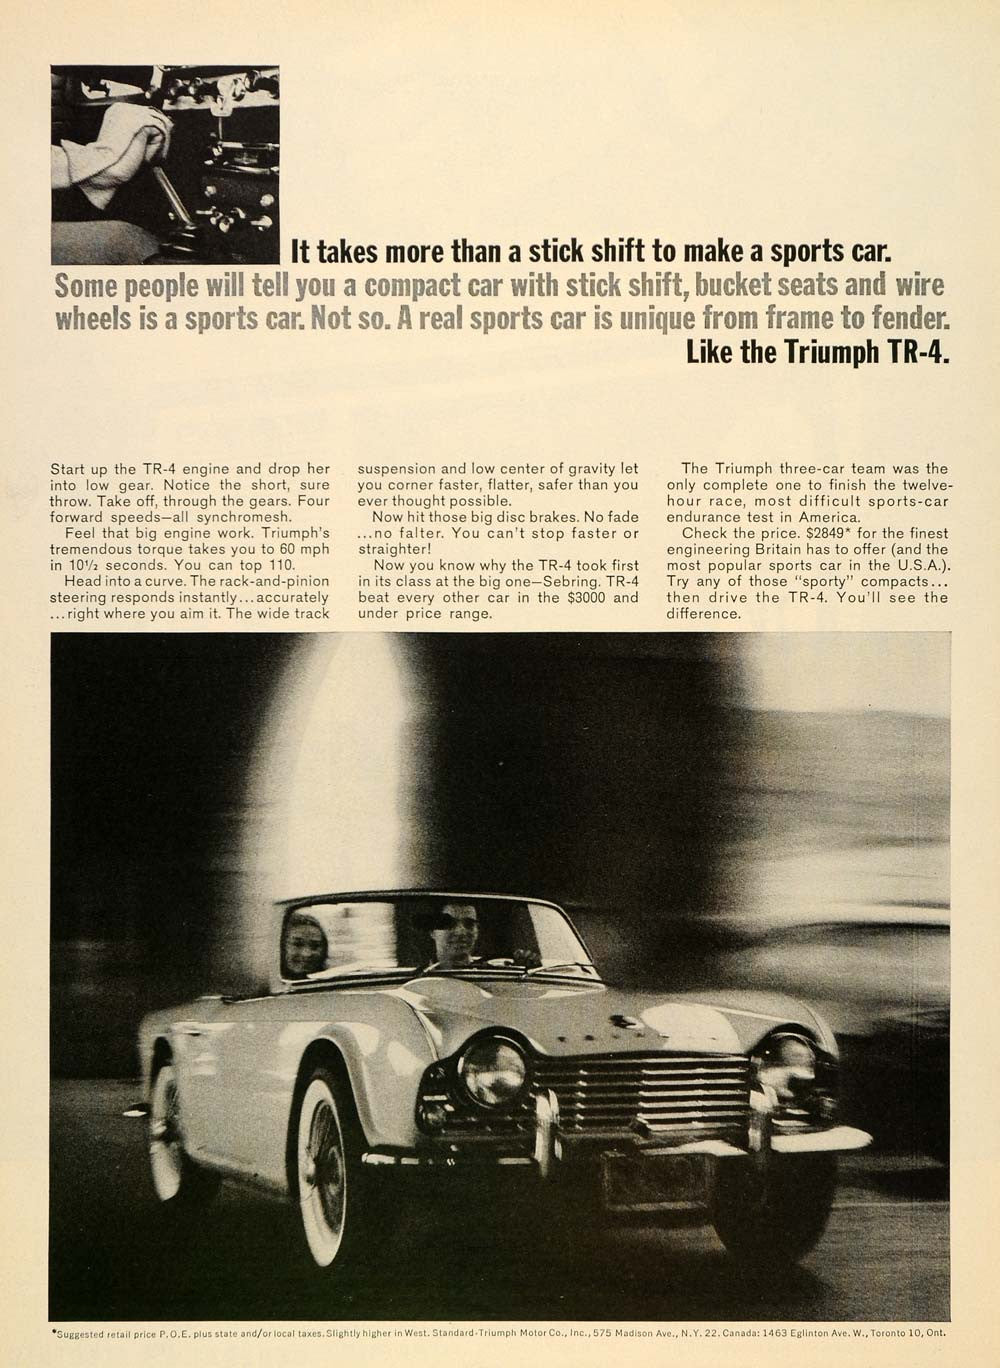 1963 Ad Triumph TR-4 Automobile Sport Convertible Car - ORIGINAL CARS7 - Period Paper
